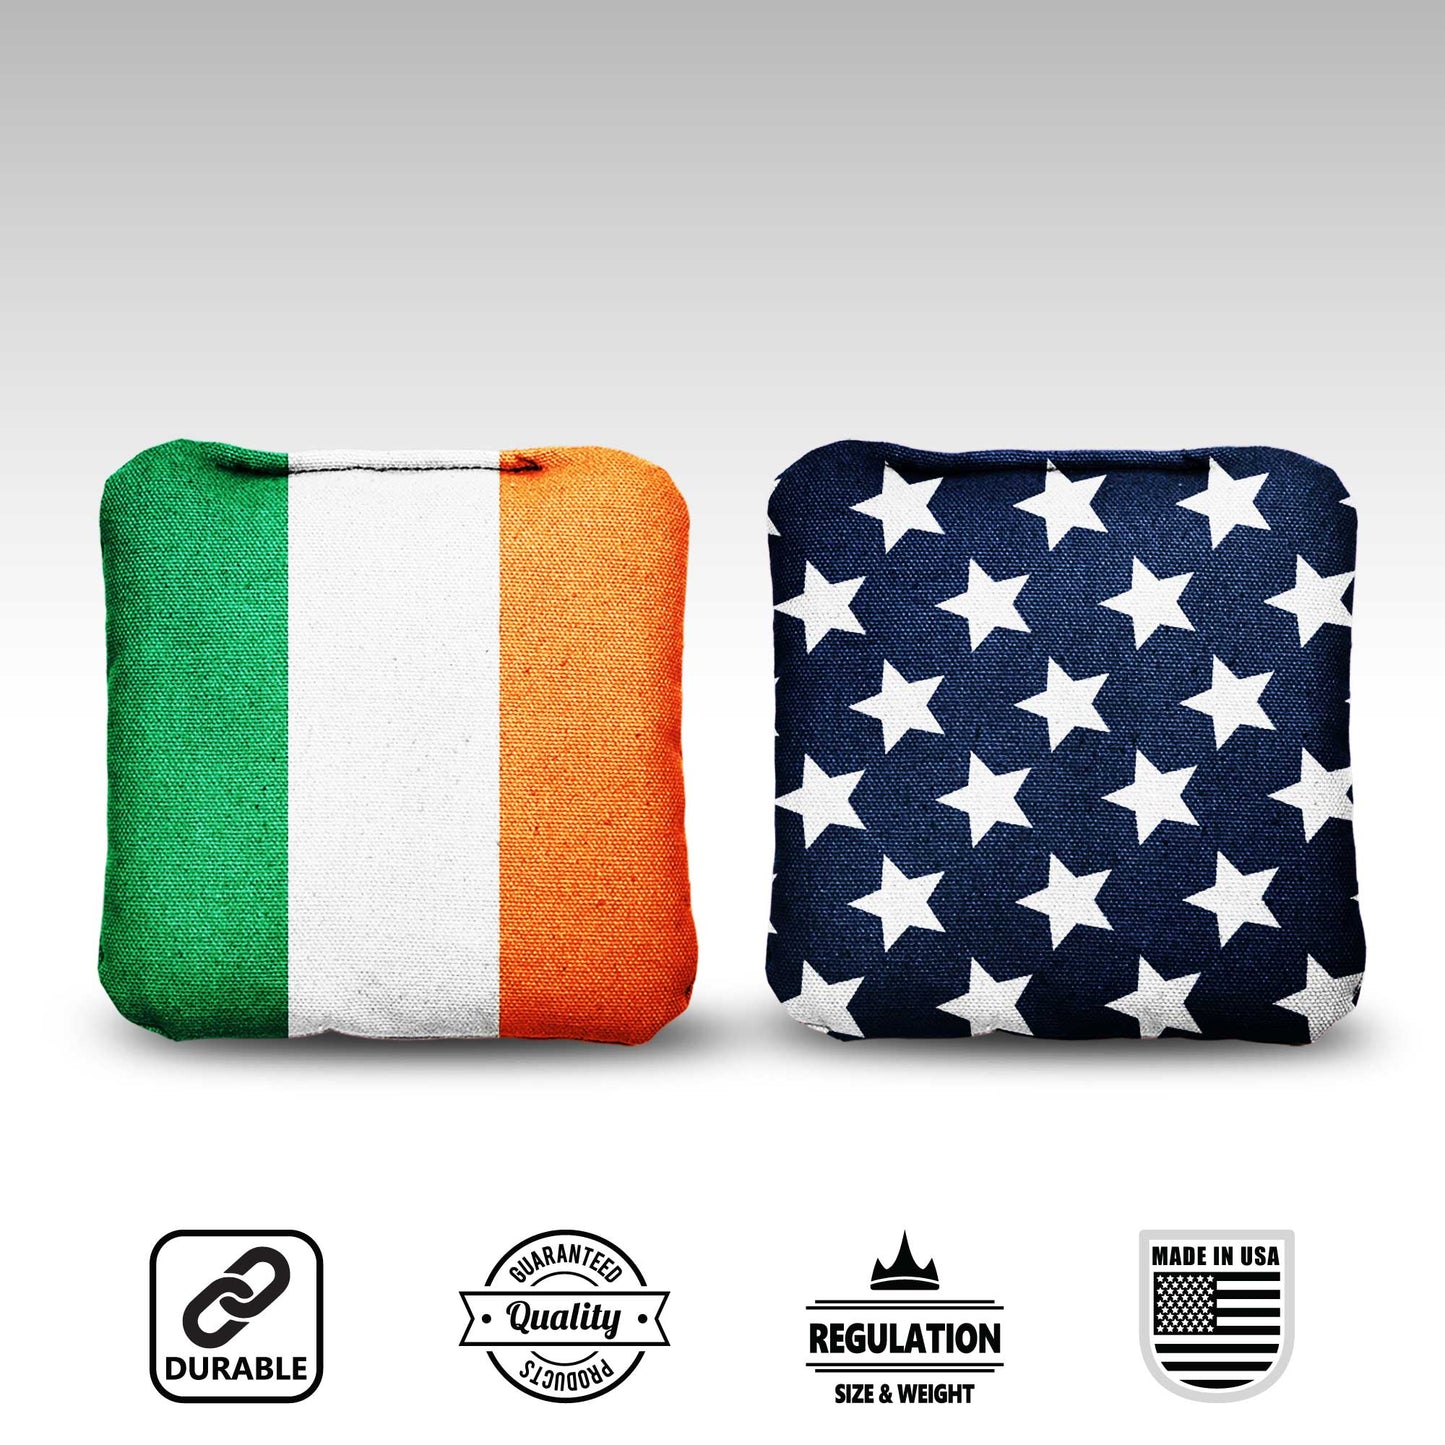 The Irish and Mericas - 8 Cornhole Bags